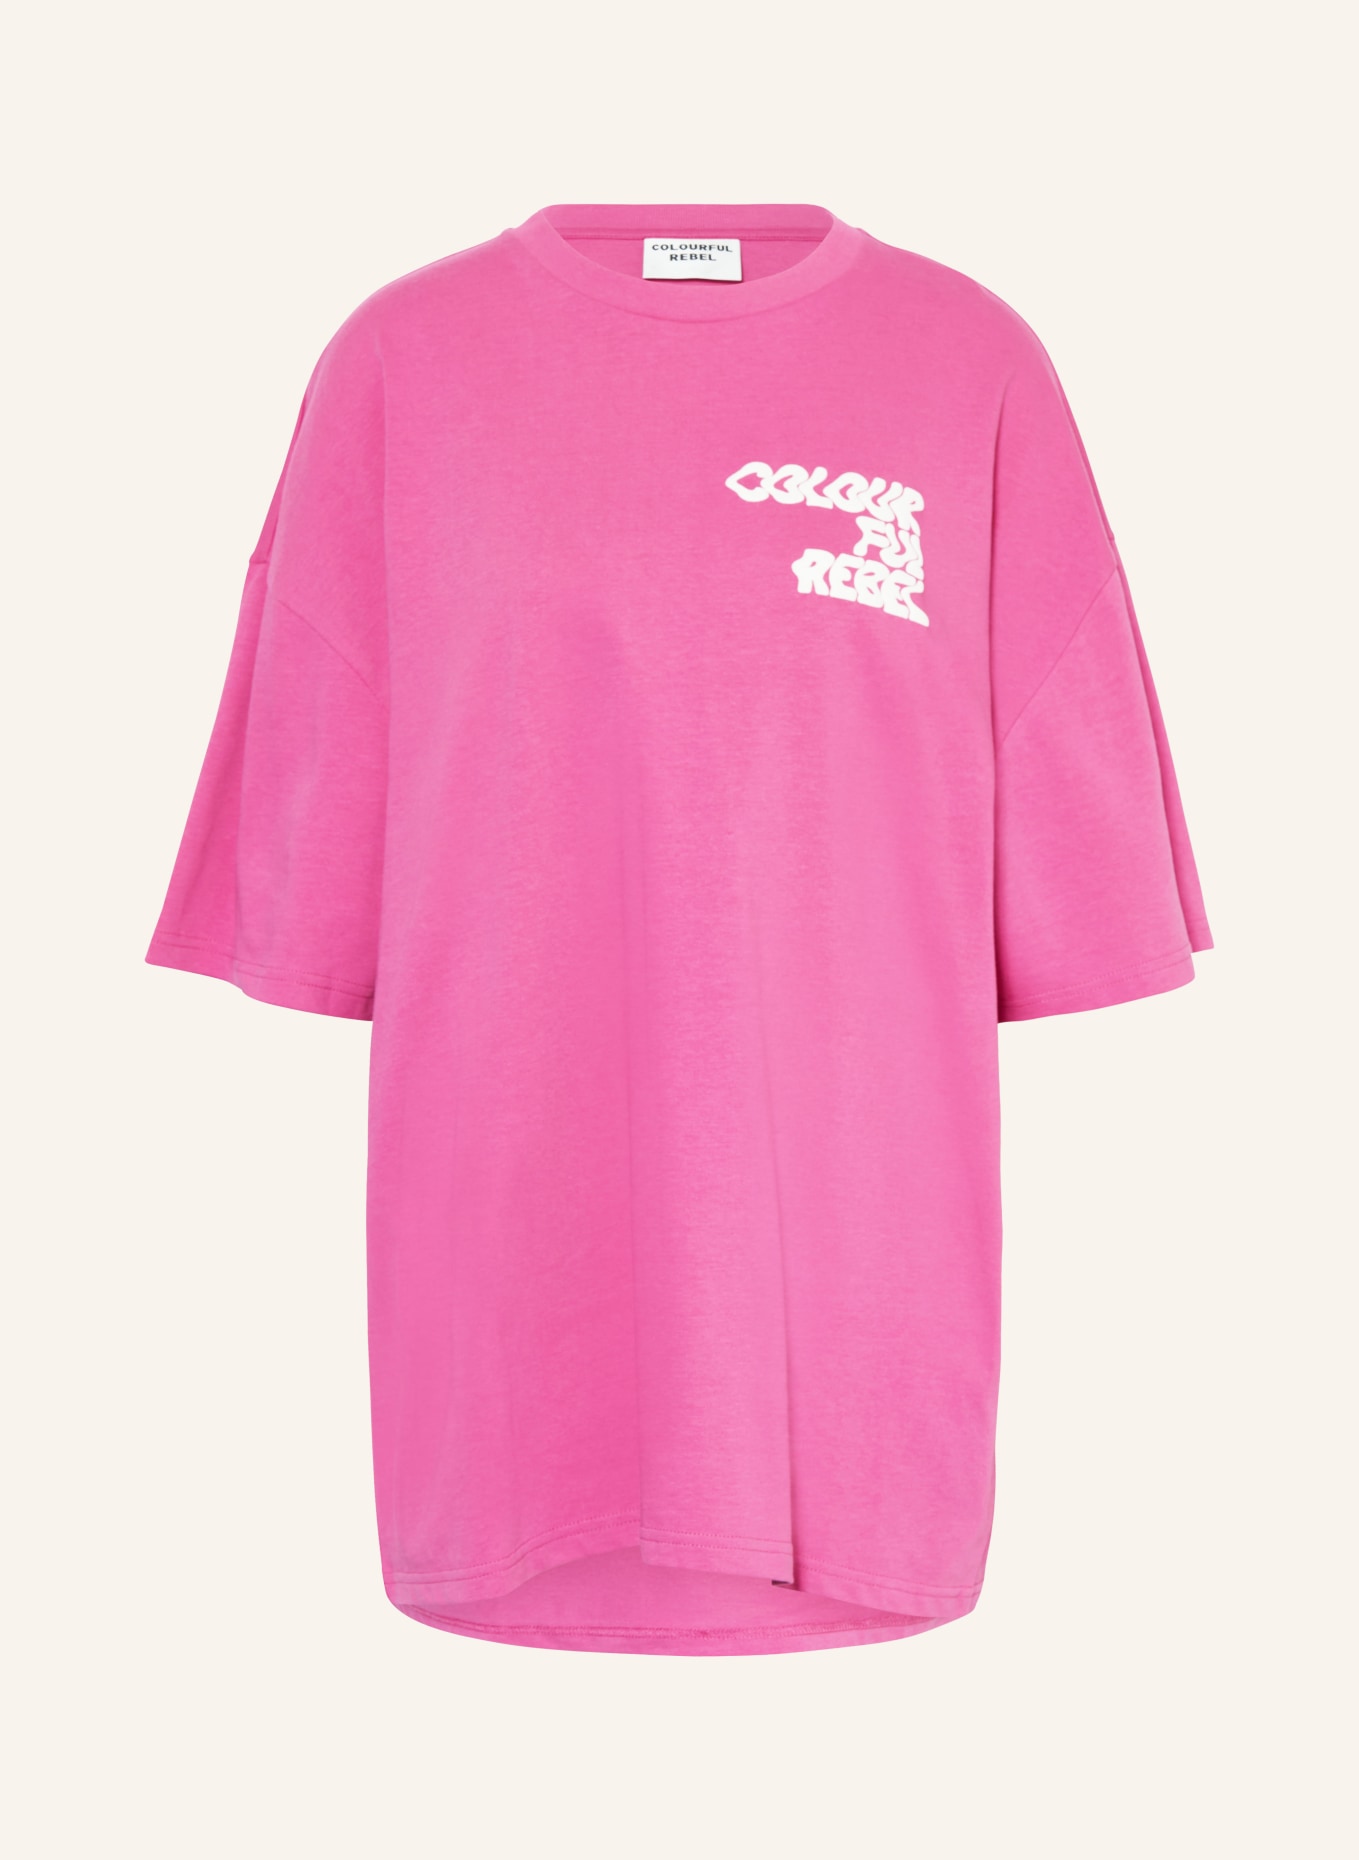 COLOURFUL REBEL Oversized-Shirt, Farbe: FUCHSIA (Bild 1)